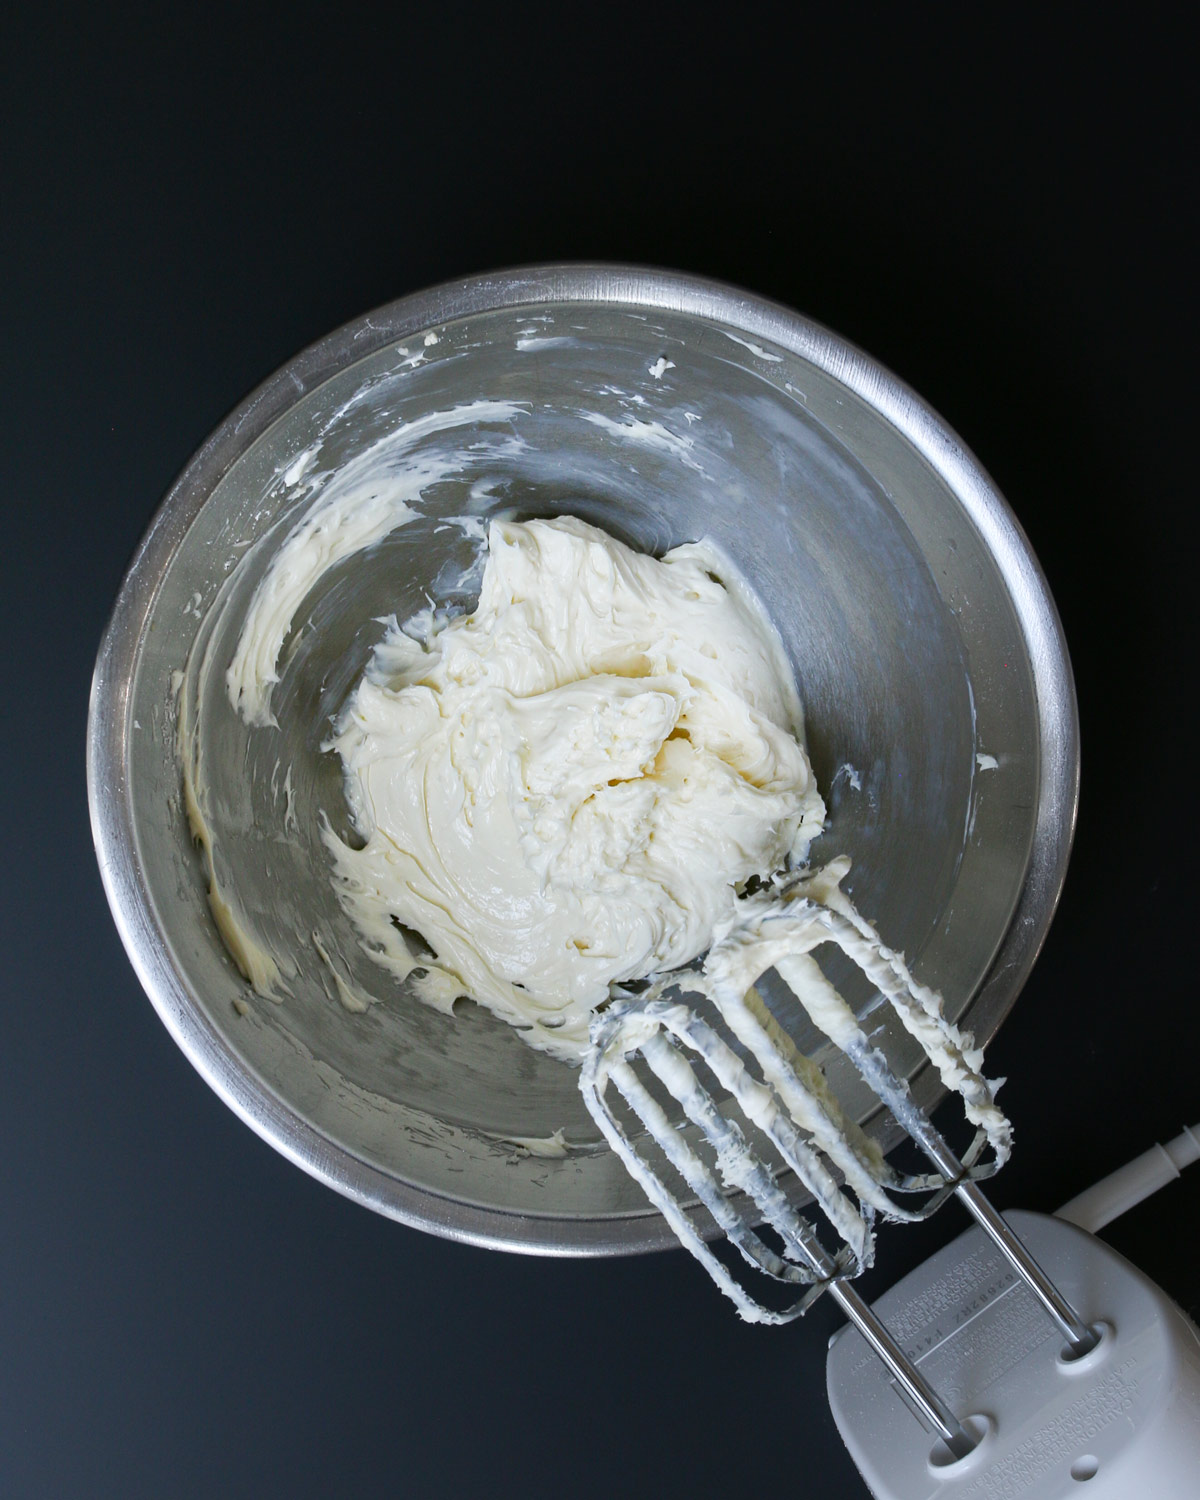 cream cheese mixture beaten with hand mixer in metal bowl.